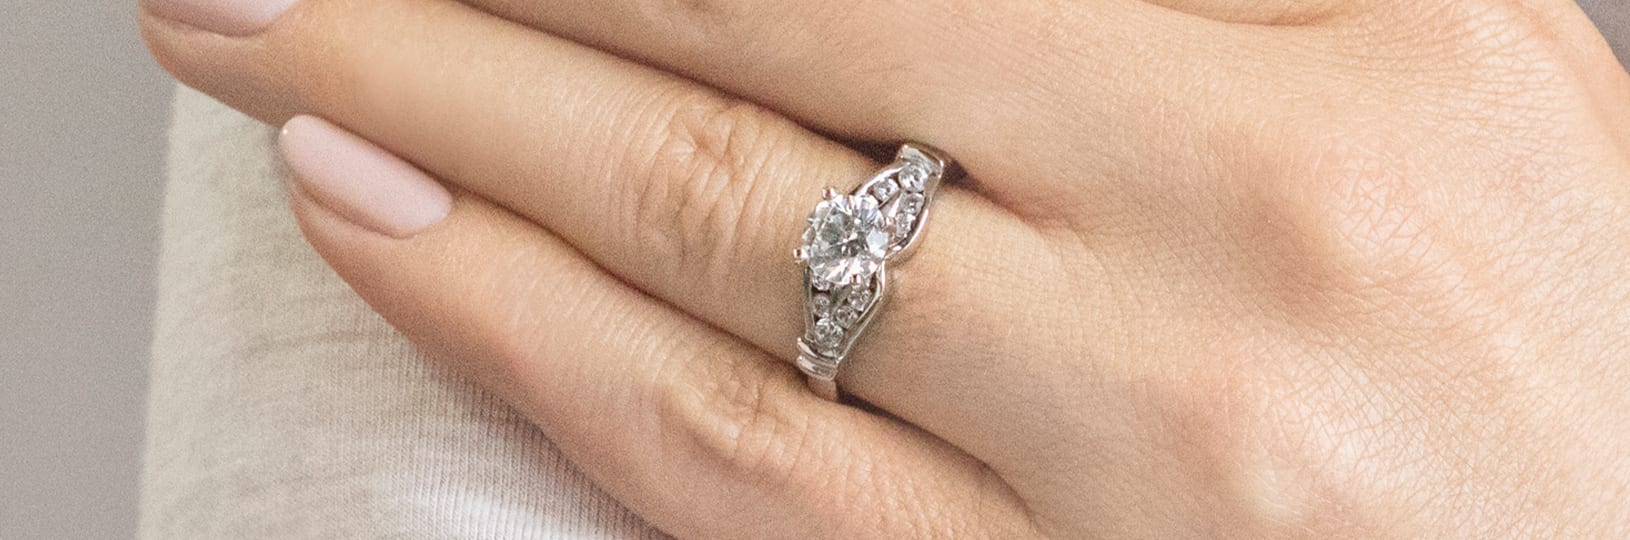 Simulated diamond engagement ring.